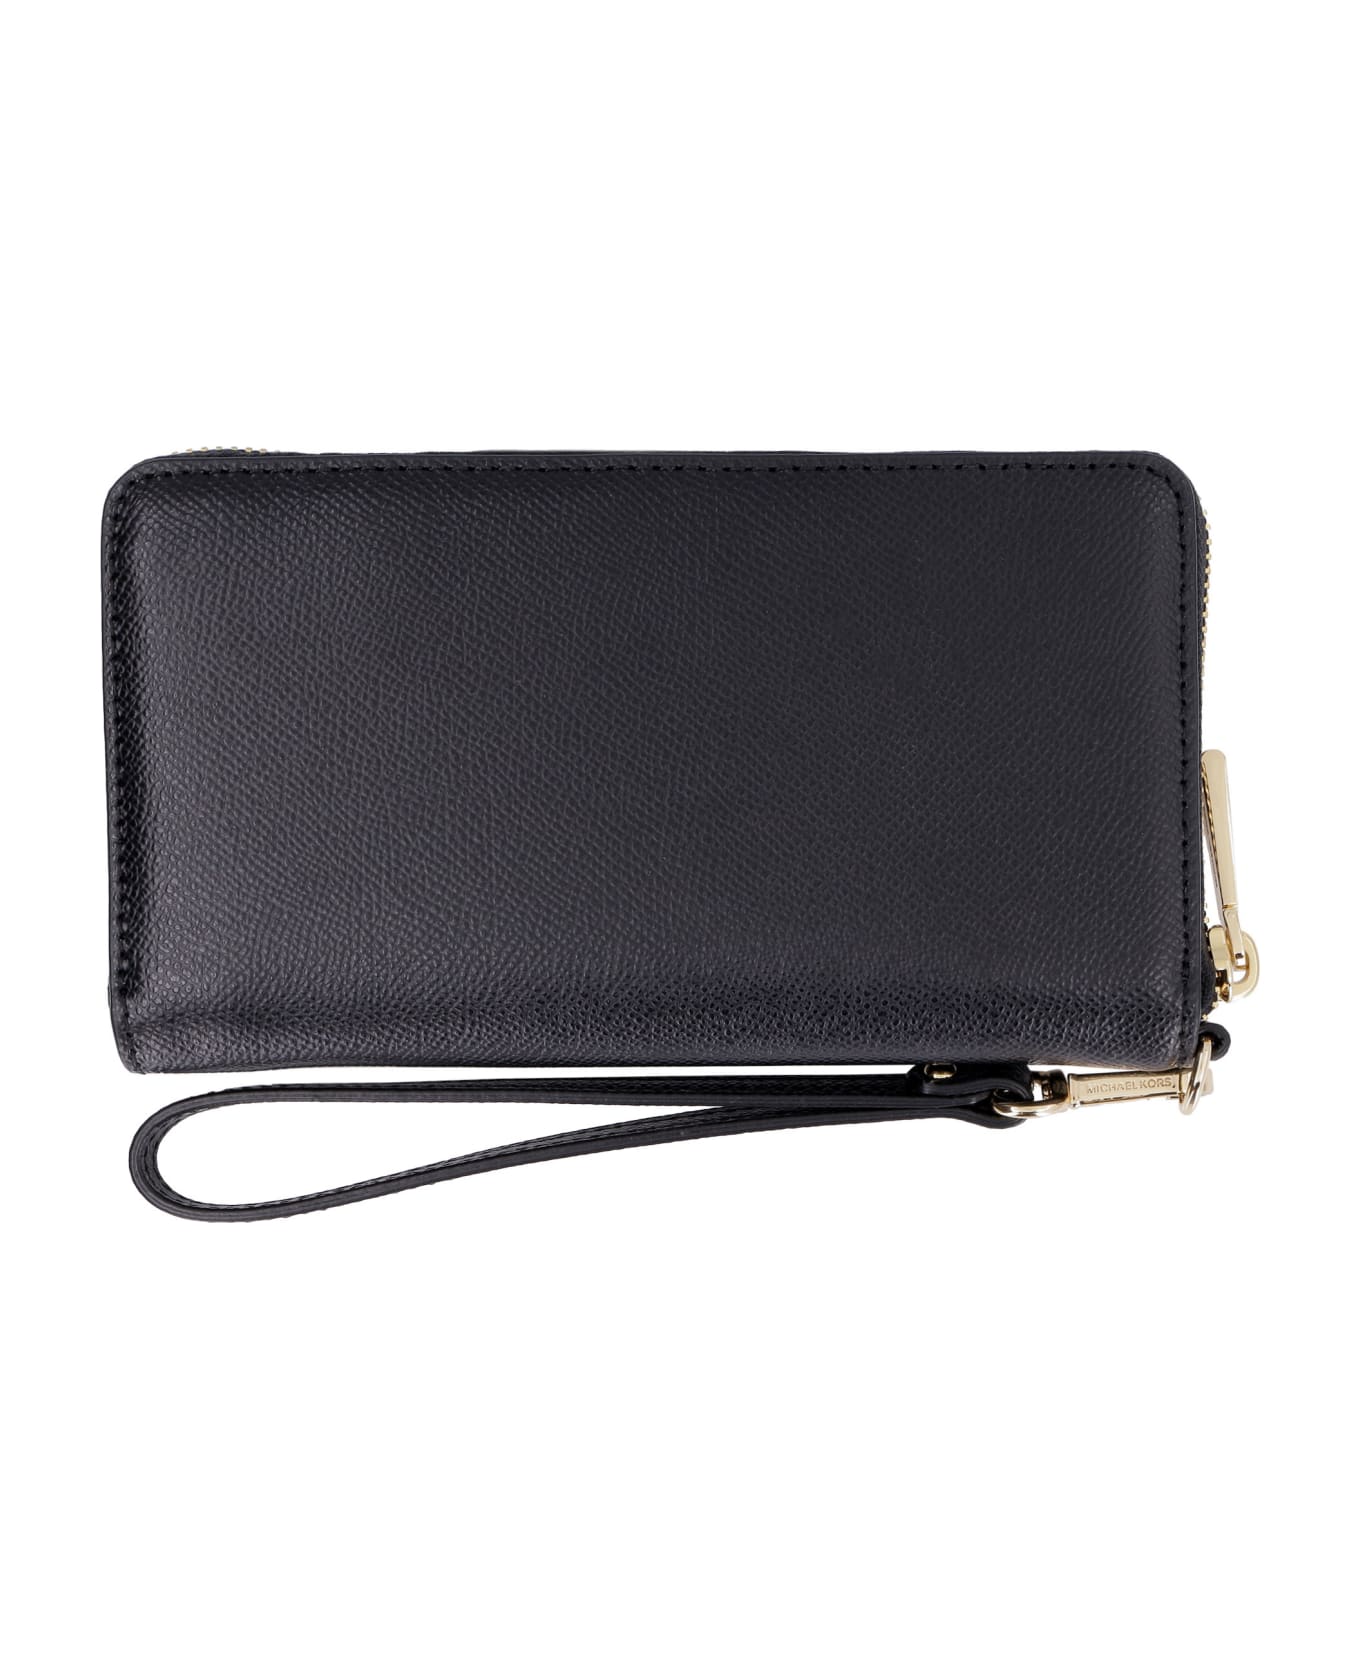 Michael Kors Leather Wallet - black